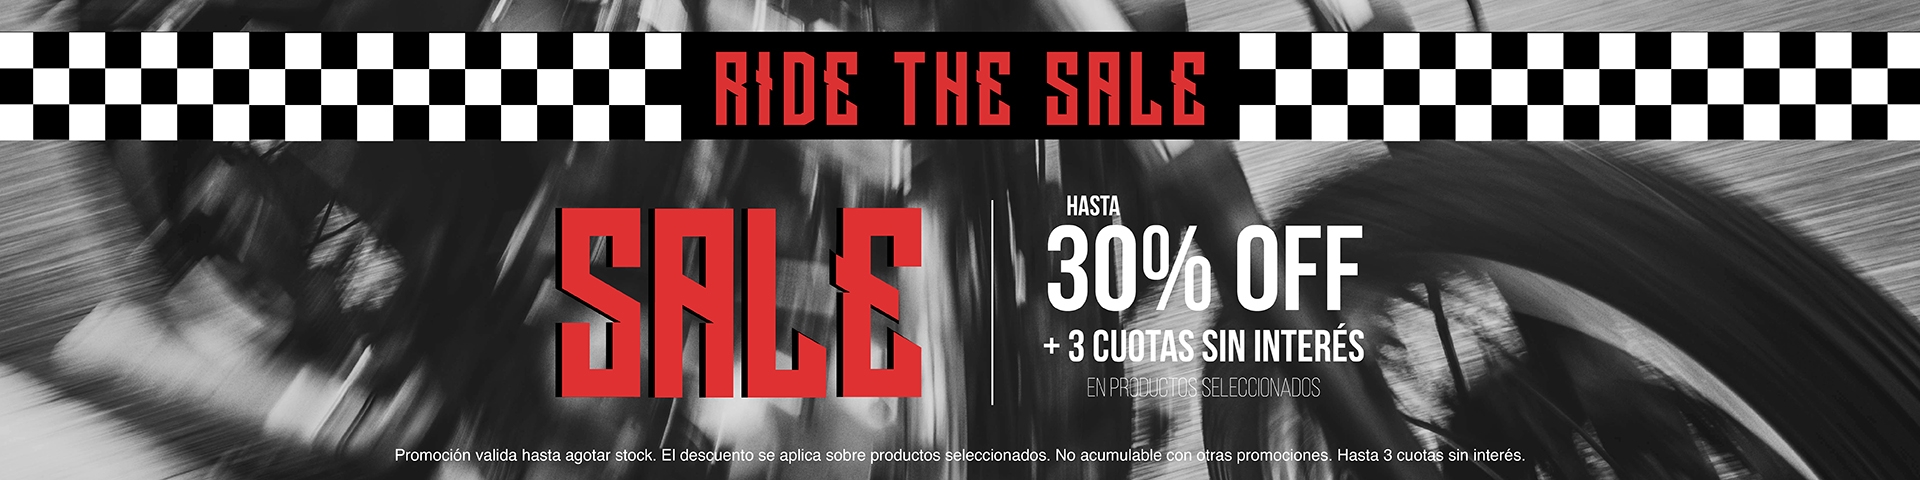 Ride The Sale